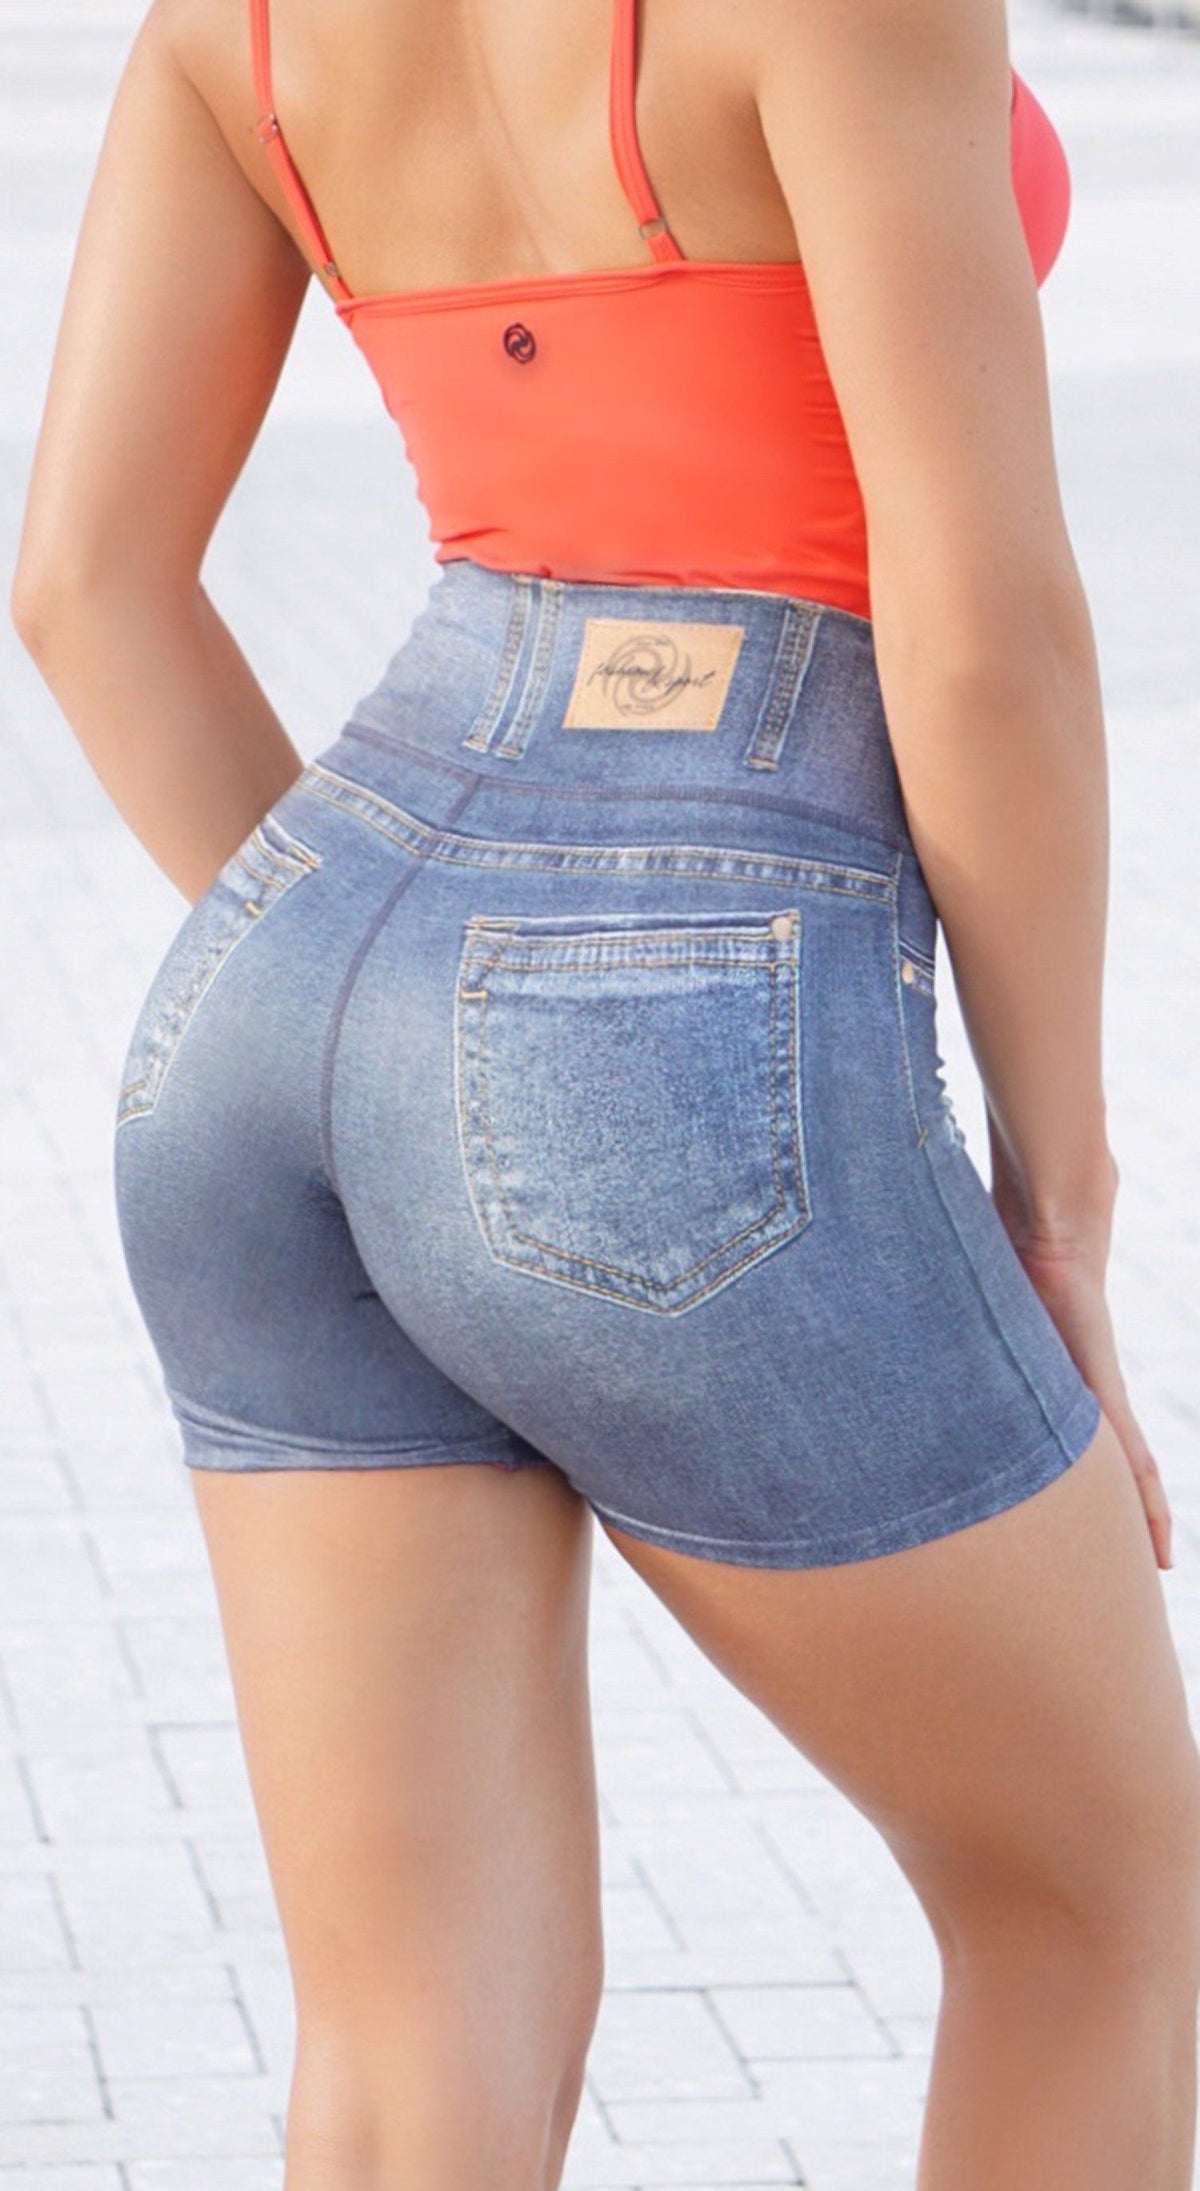 Fun Reversible Shorts - Jeans Print